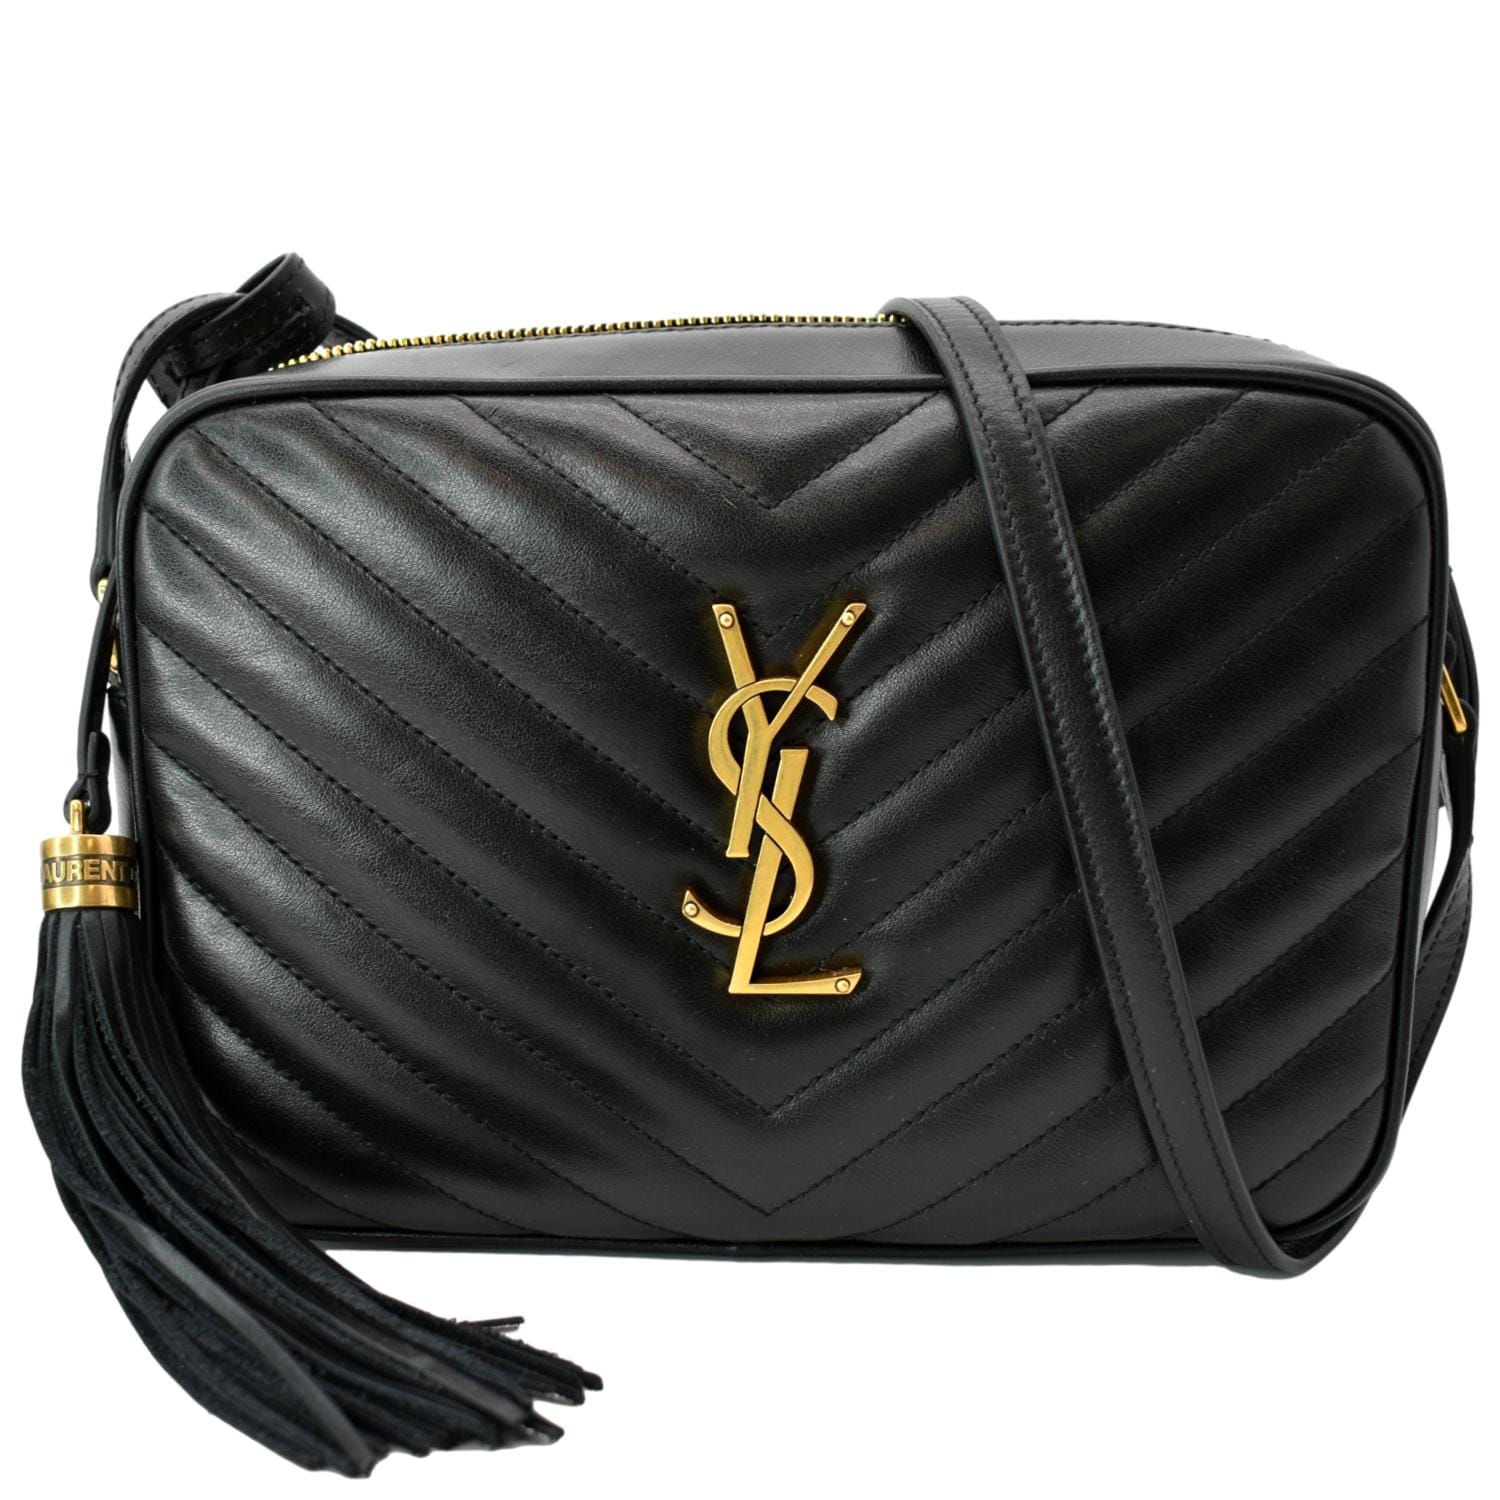 Lou Camera Leather Crossbody Bag in Black - Saint Laurent